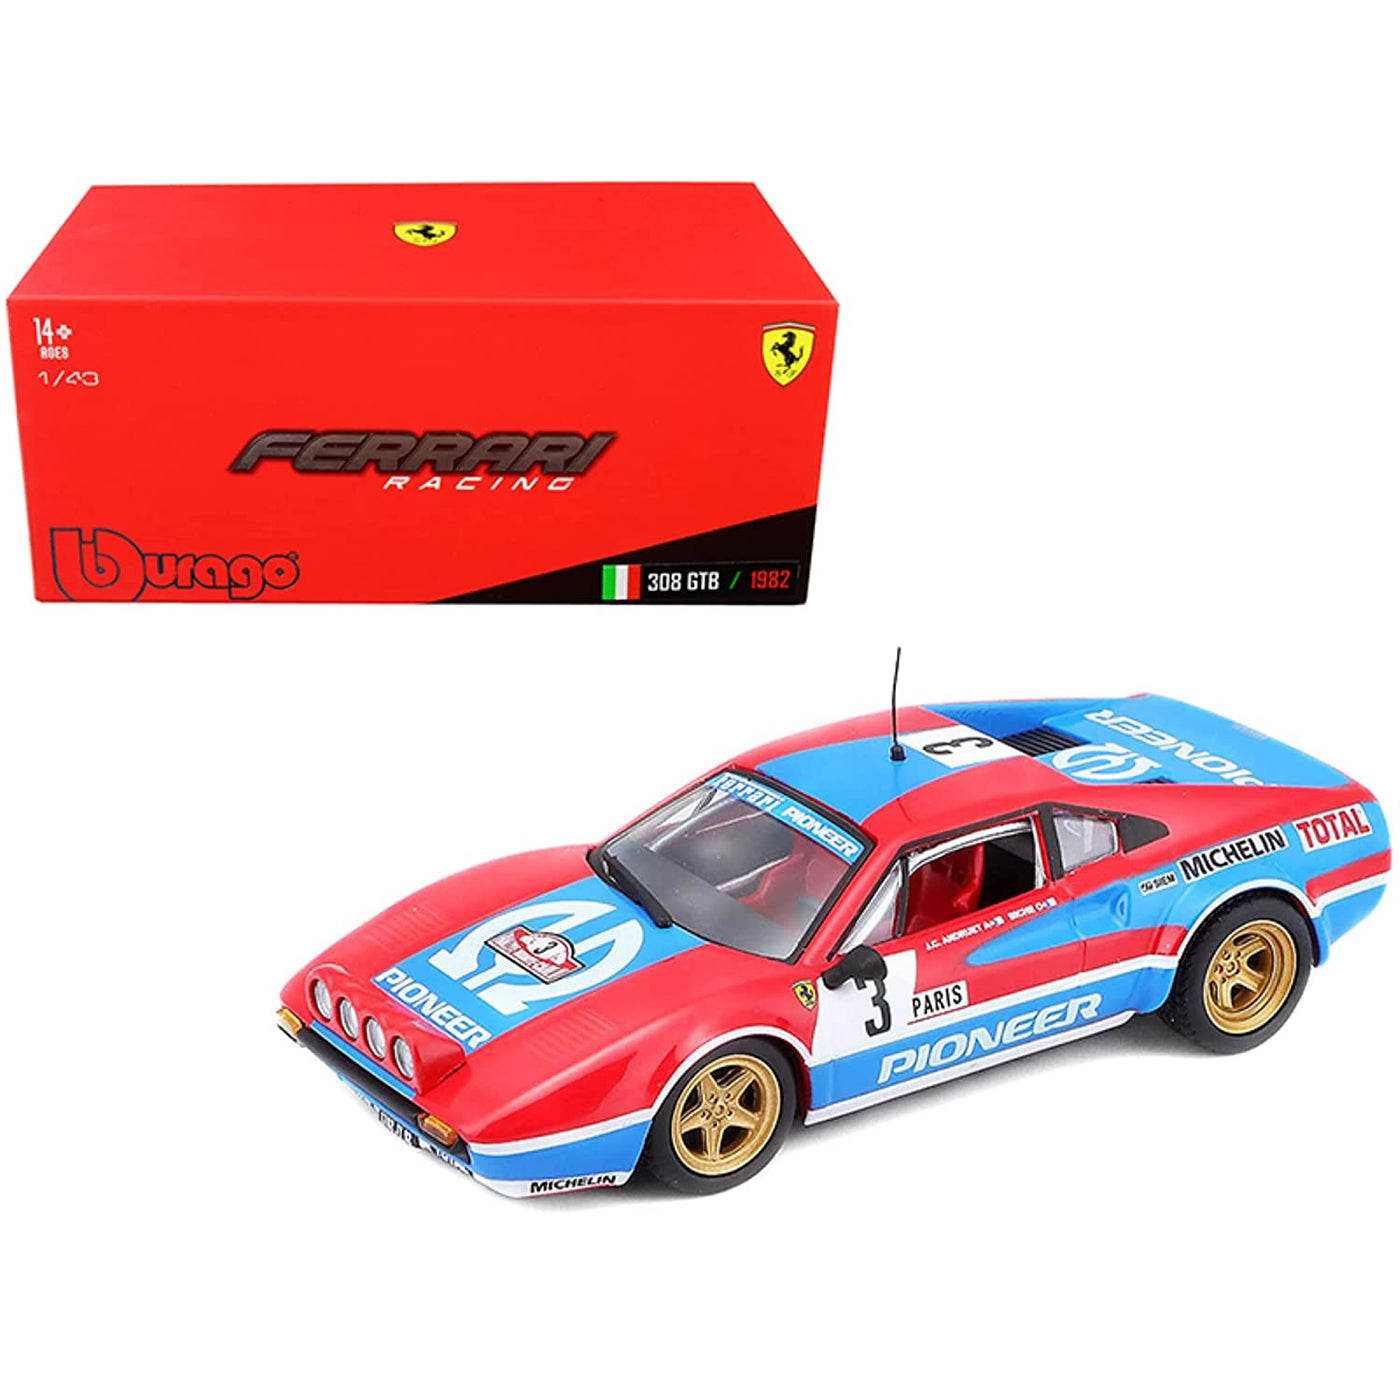 Ferrari Racing 308 GTB 1982 - Die-Cast Scale Model 1:43 | Bburago